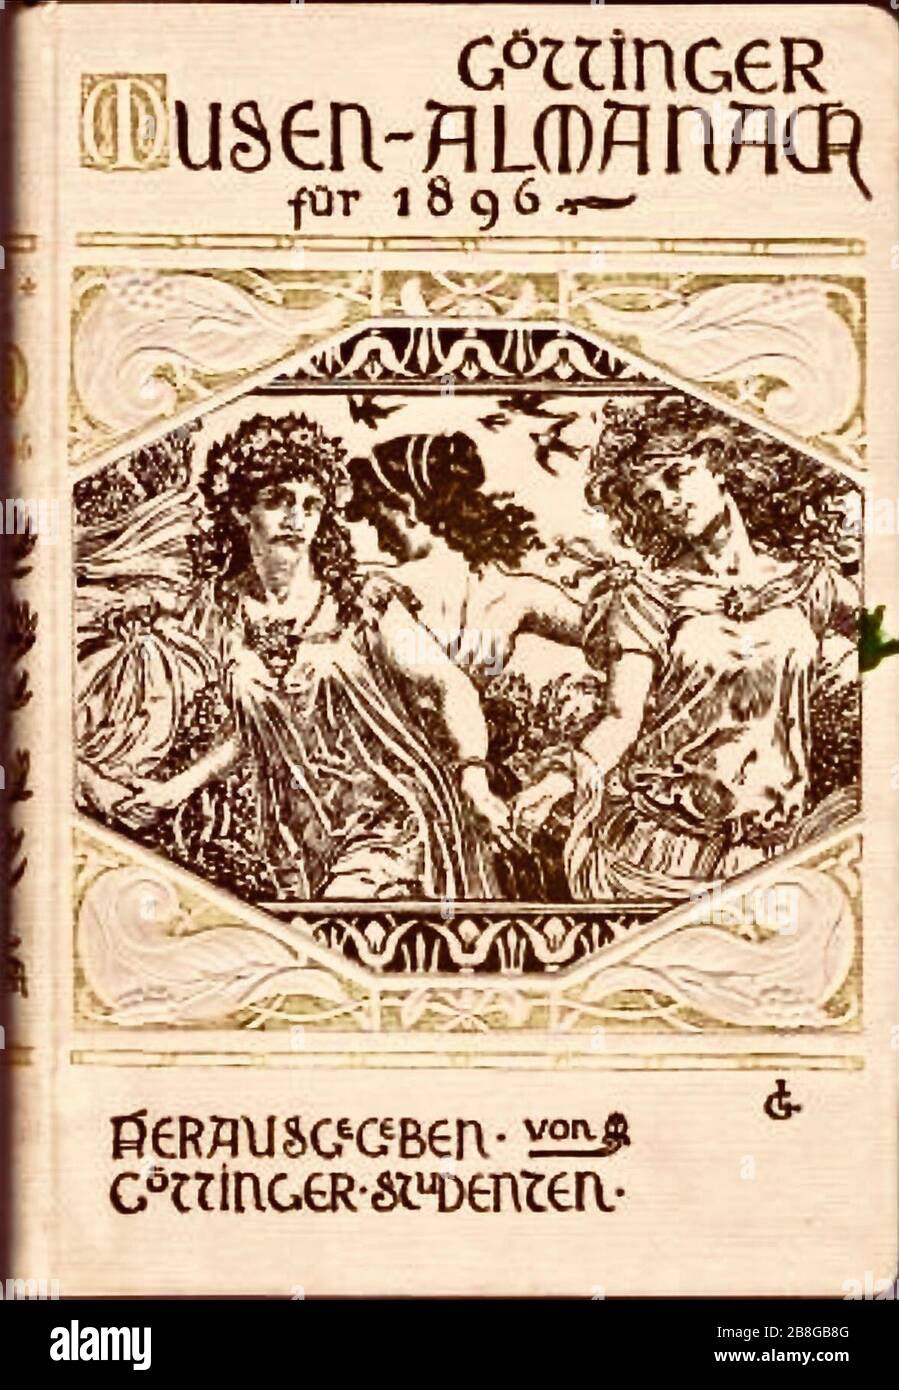 Goettinger musen-almanach fuer 1898. Stock Photo